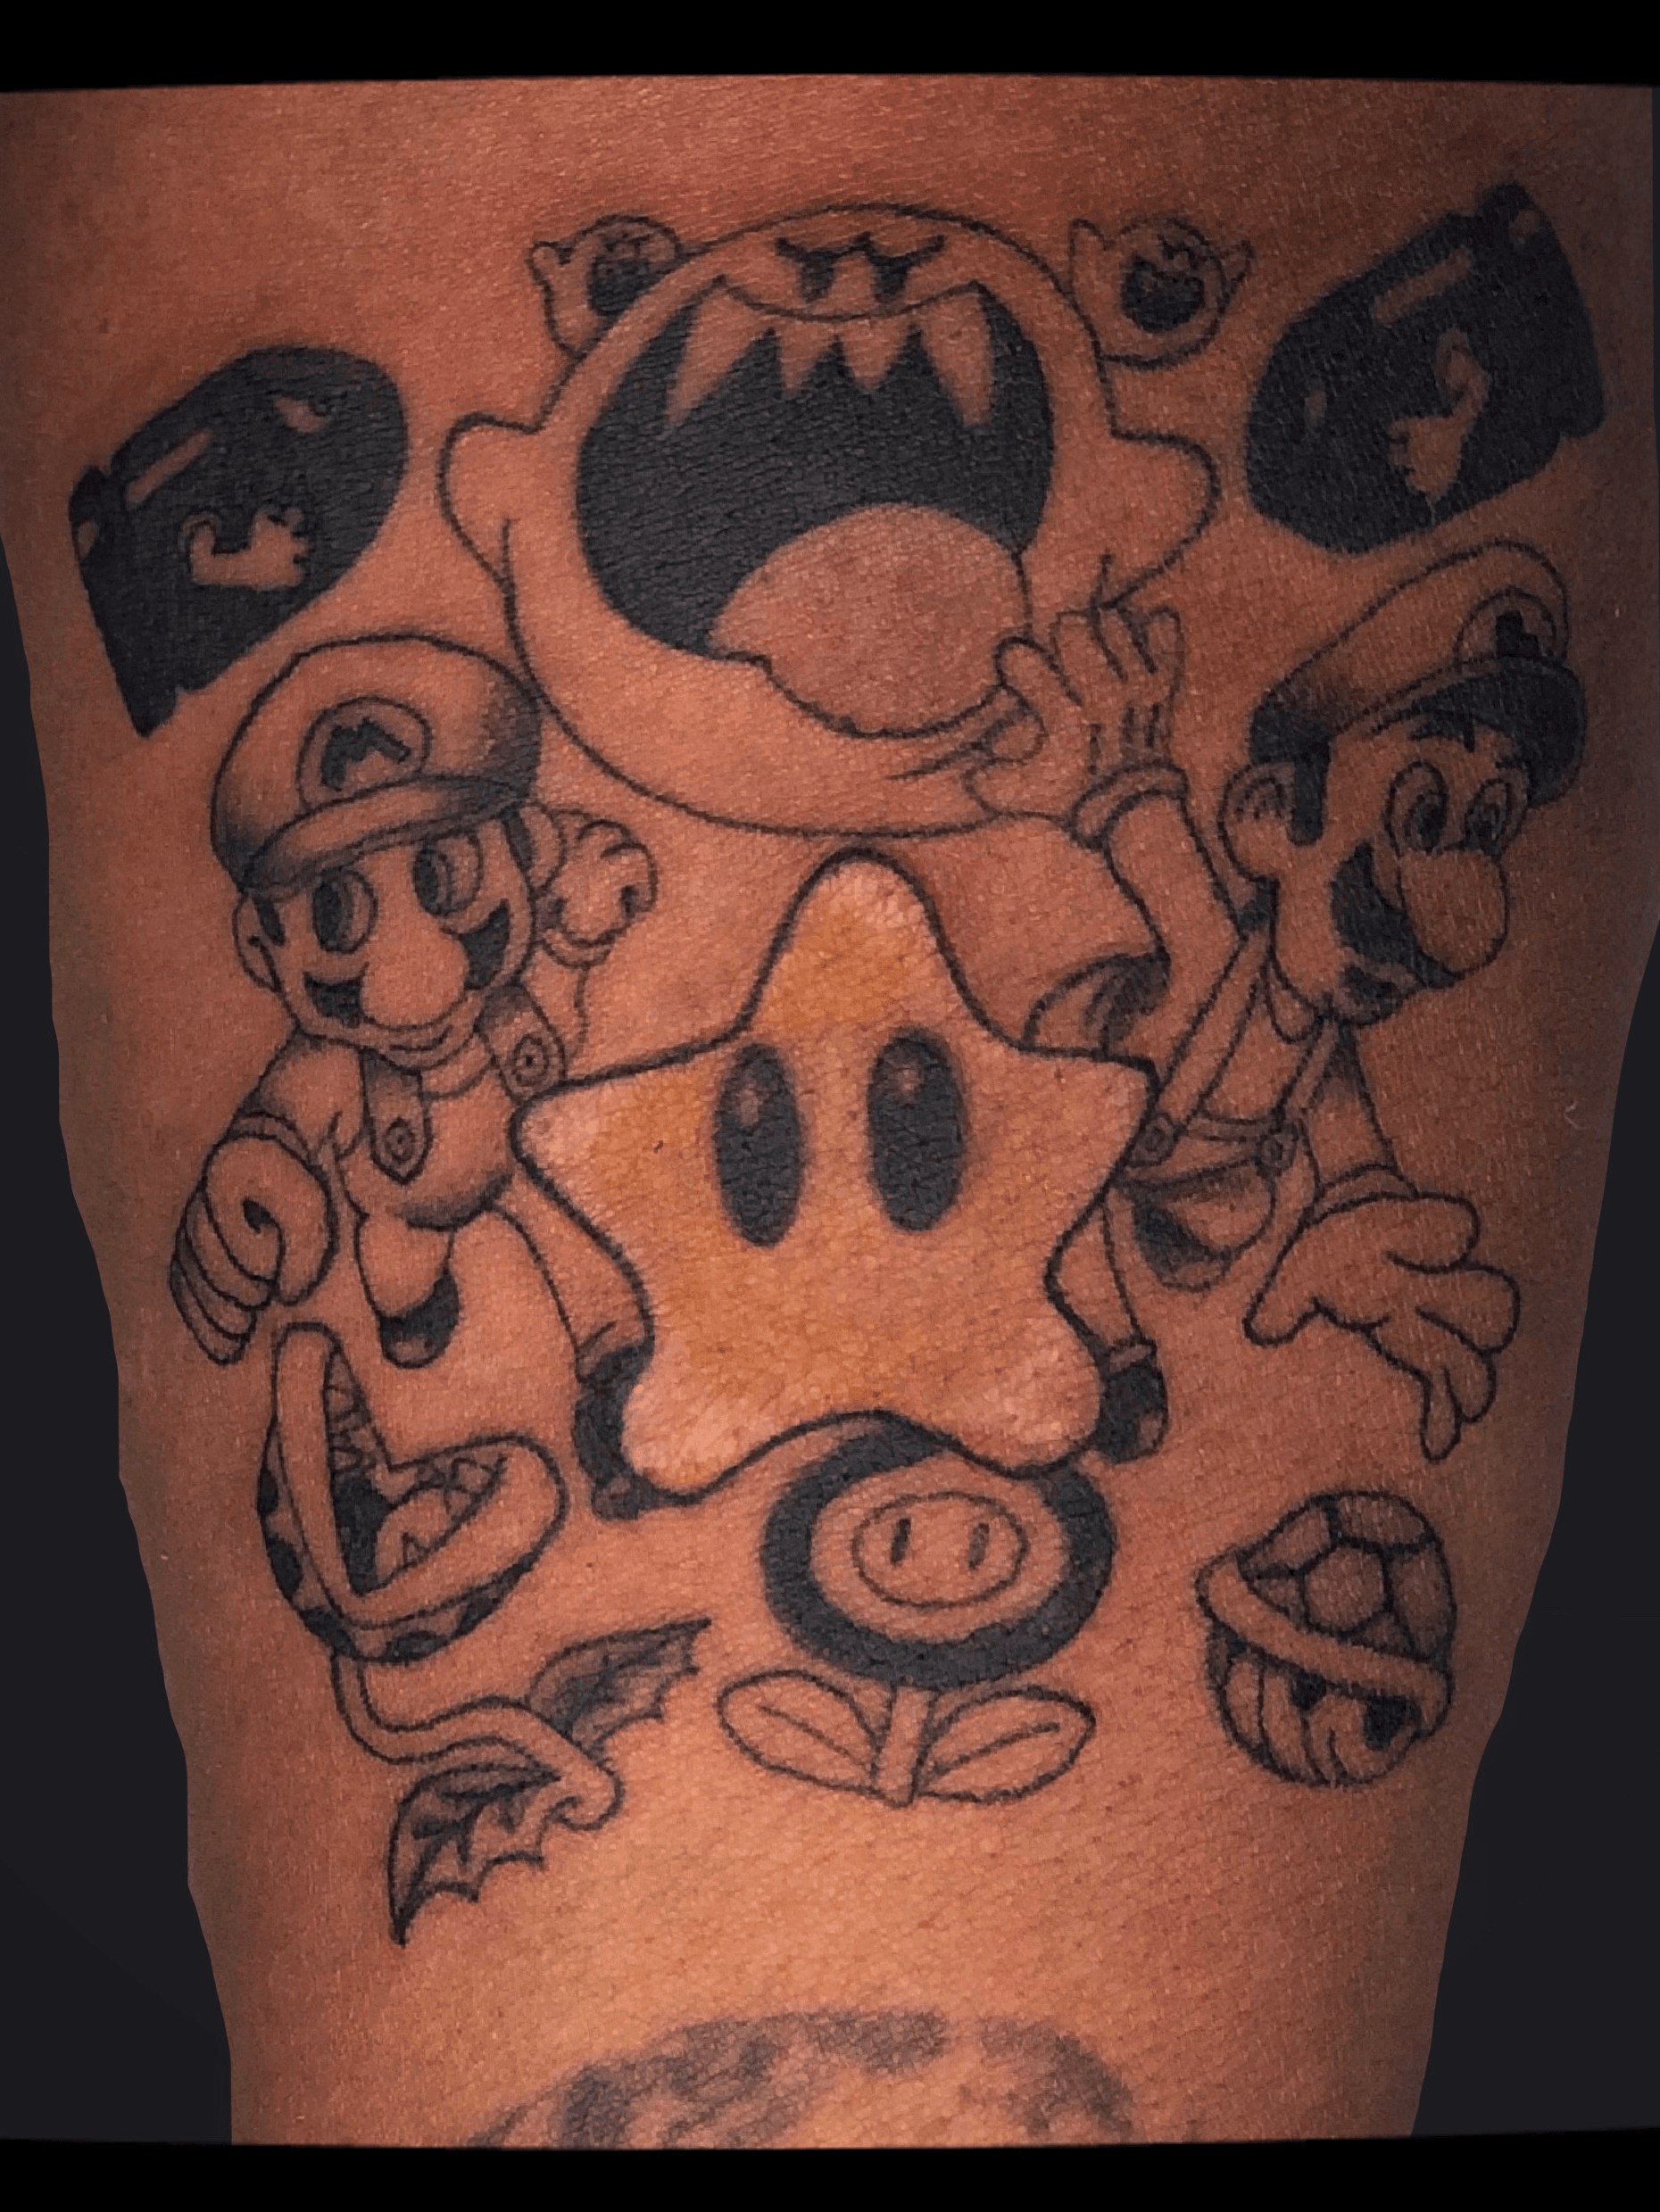 Super Mario tattoo by Barbara Kiczek  Post 15014